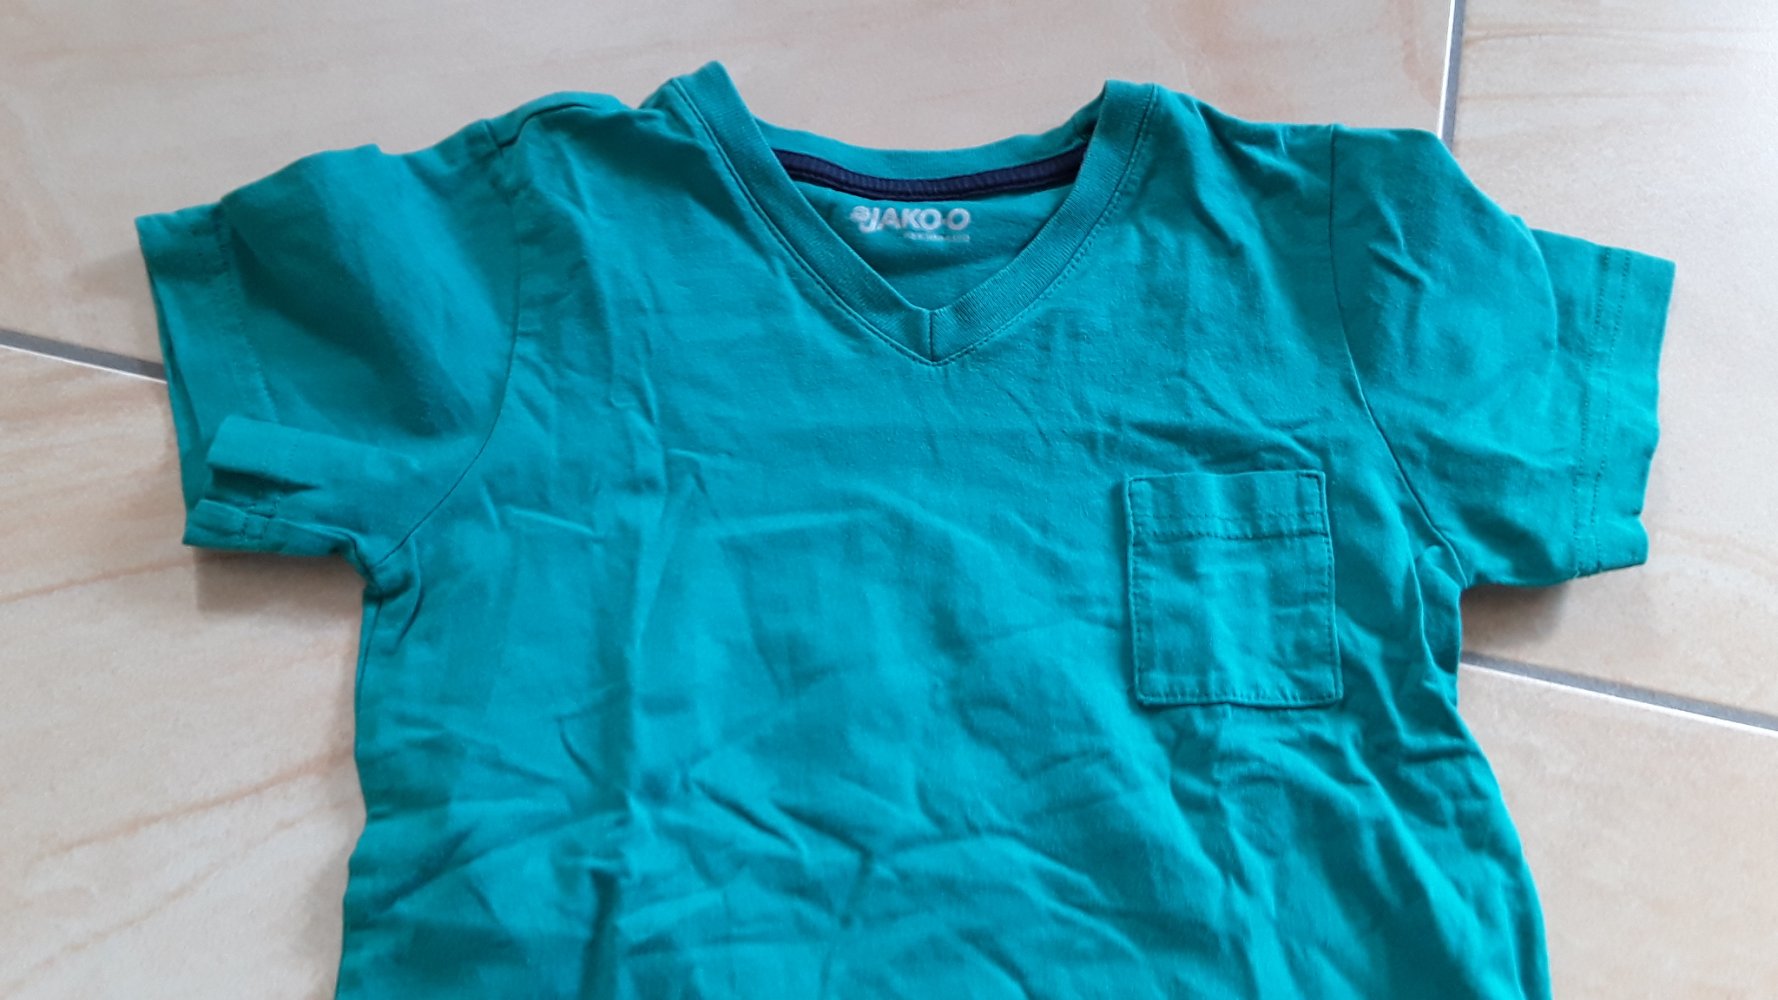 grünes T-Shirt von Jako-o Gr. 104/110